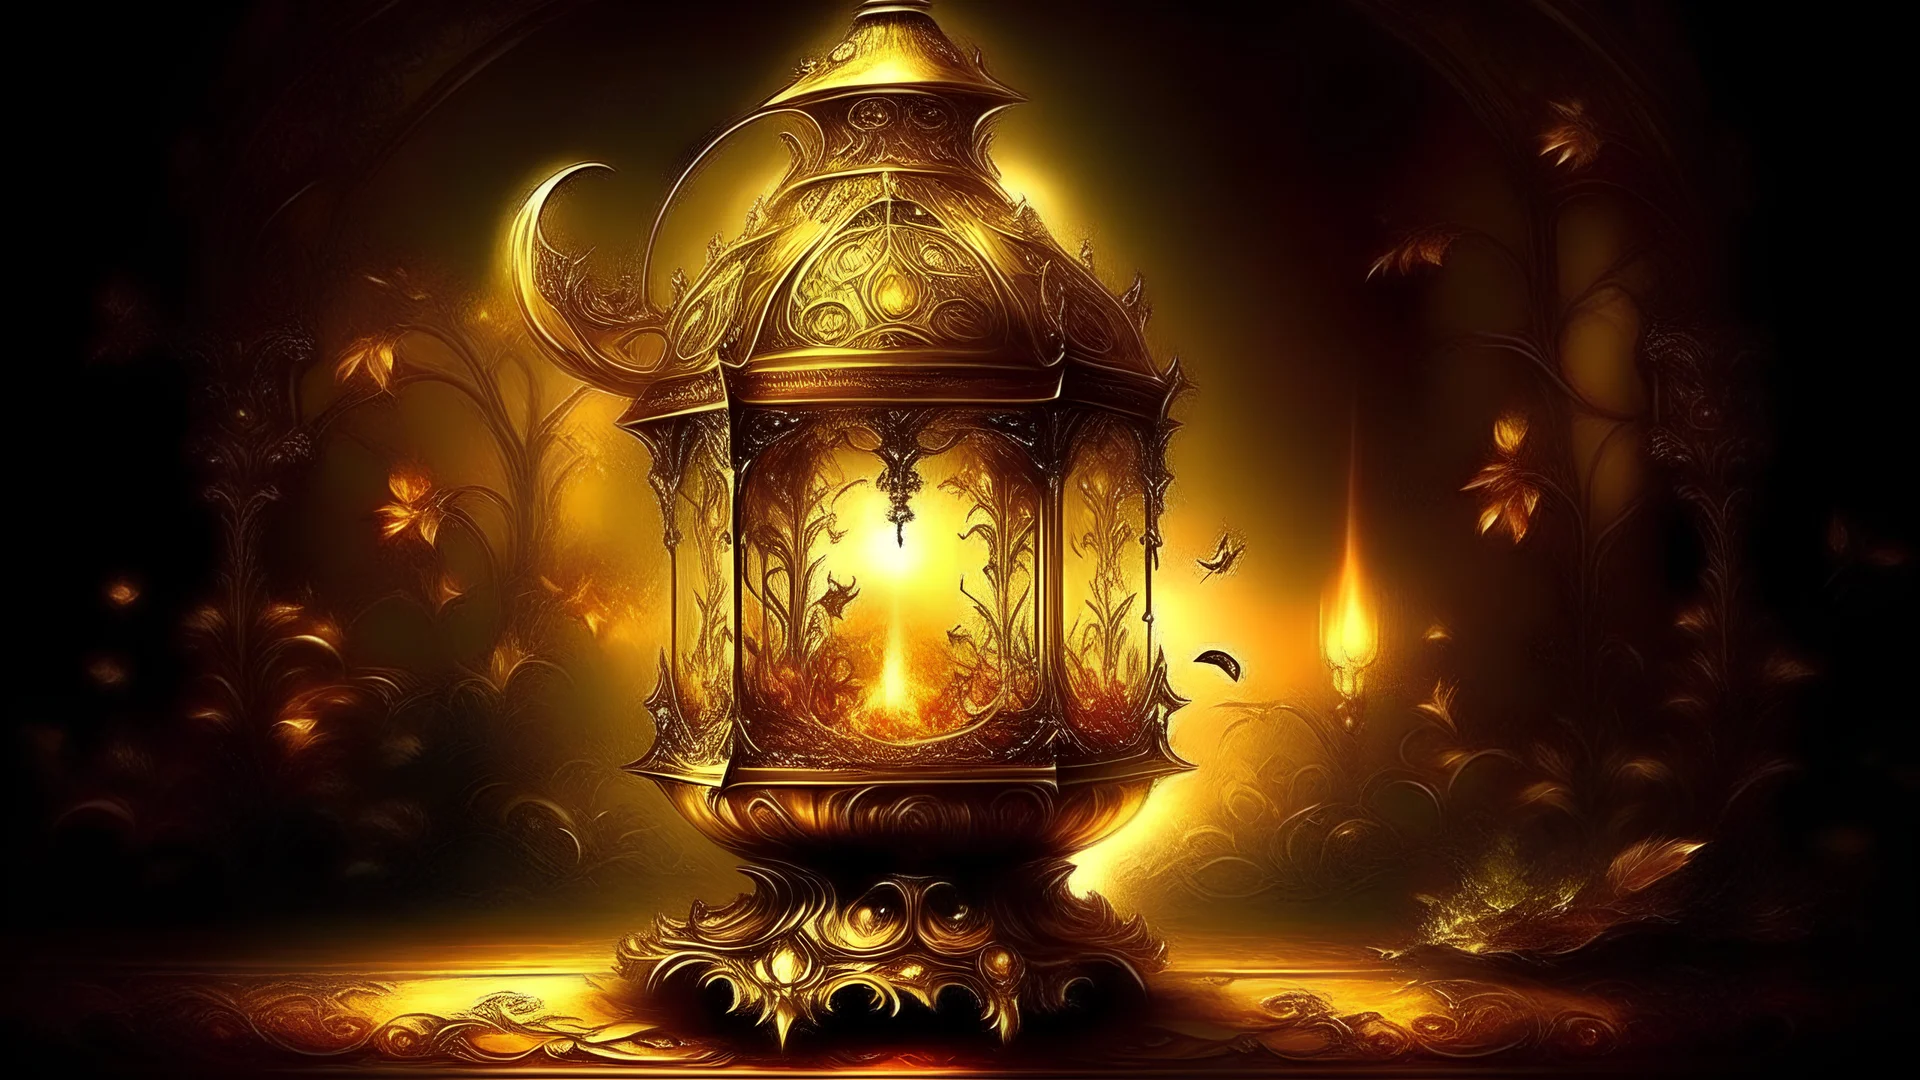 fantasy, gold, magical lamp, display, mystical, magical, stunning, vivid, beautiful